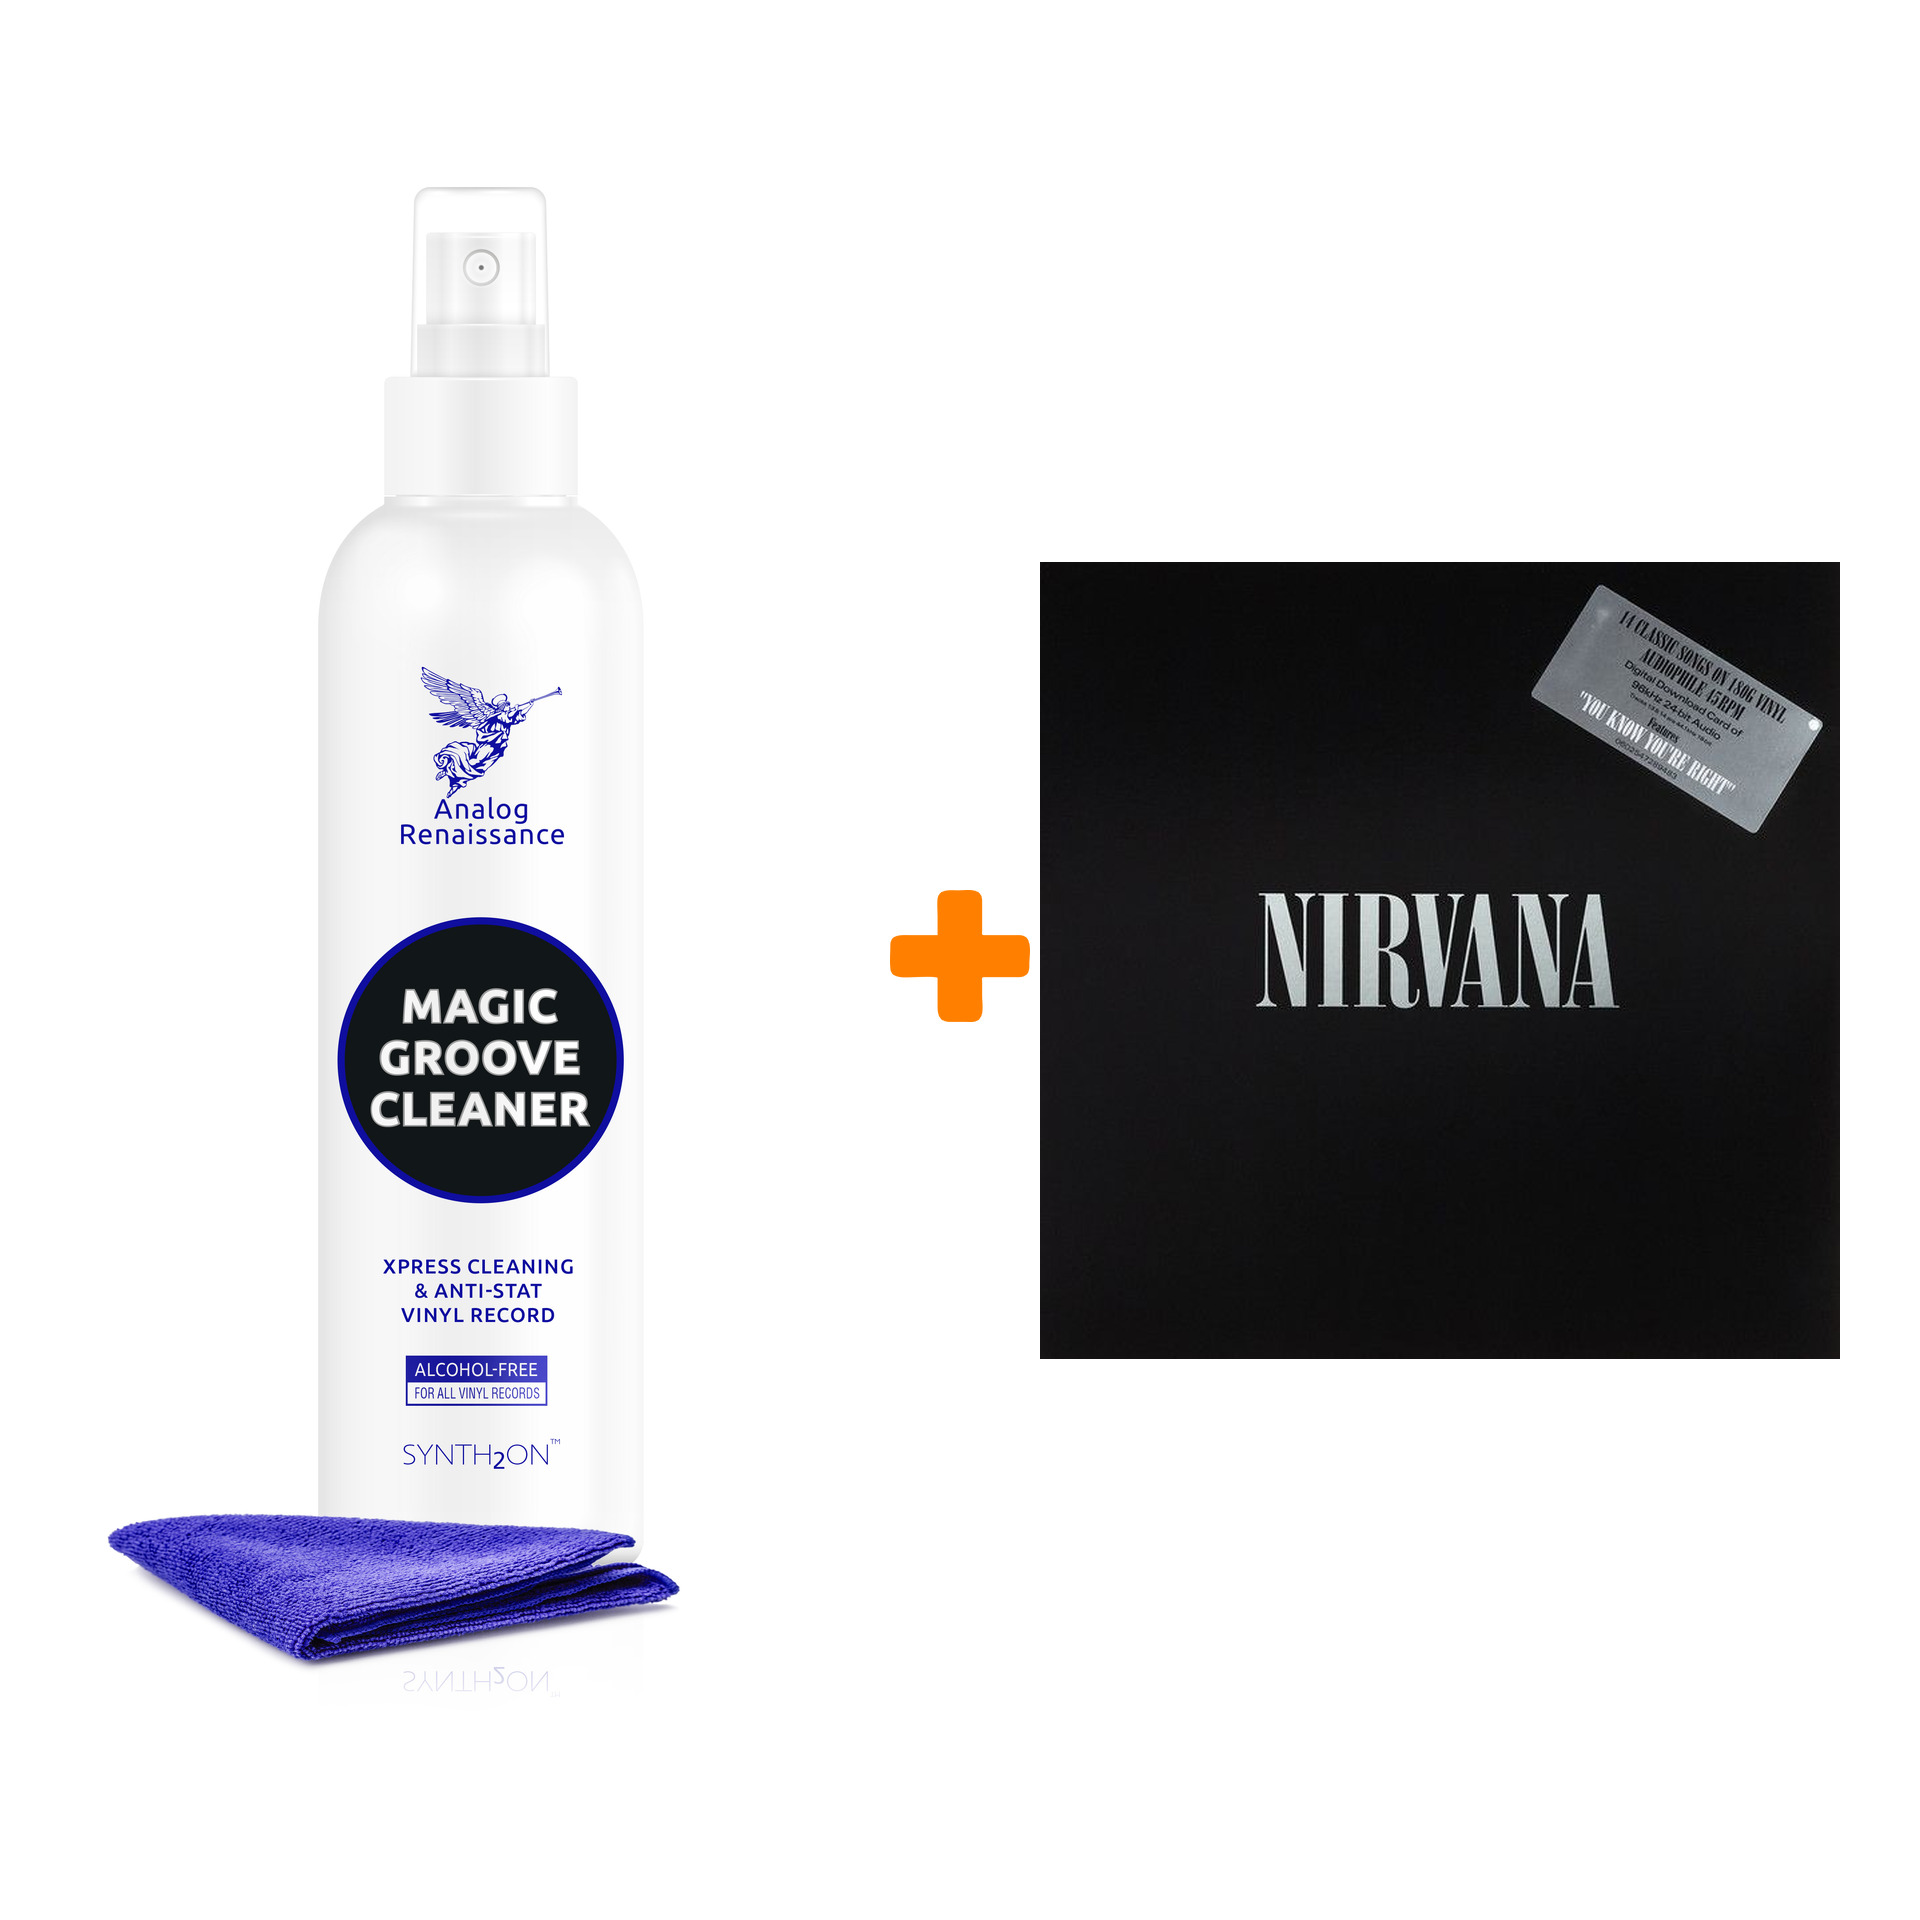 NIRVANA Nirvana Deluxe Edition 2LP + Спрей для очистки LP с микрофиброй 250мл Набор